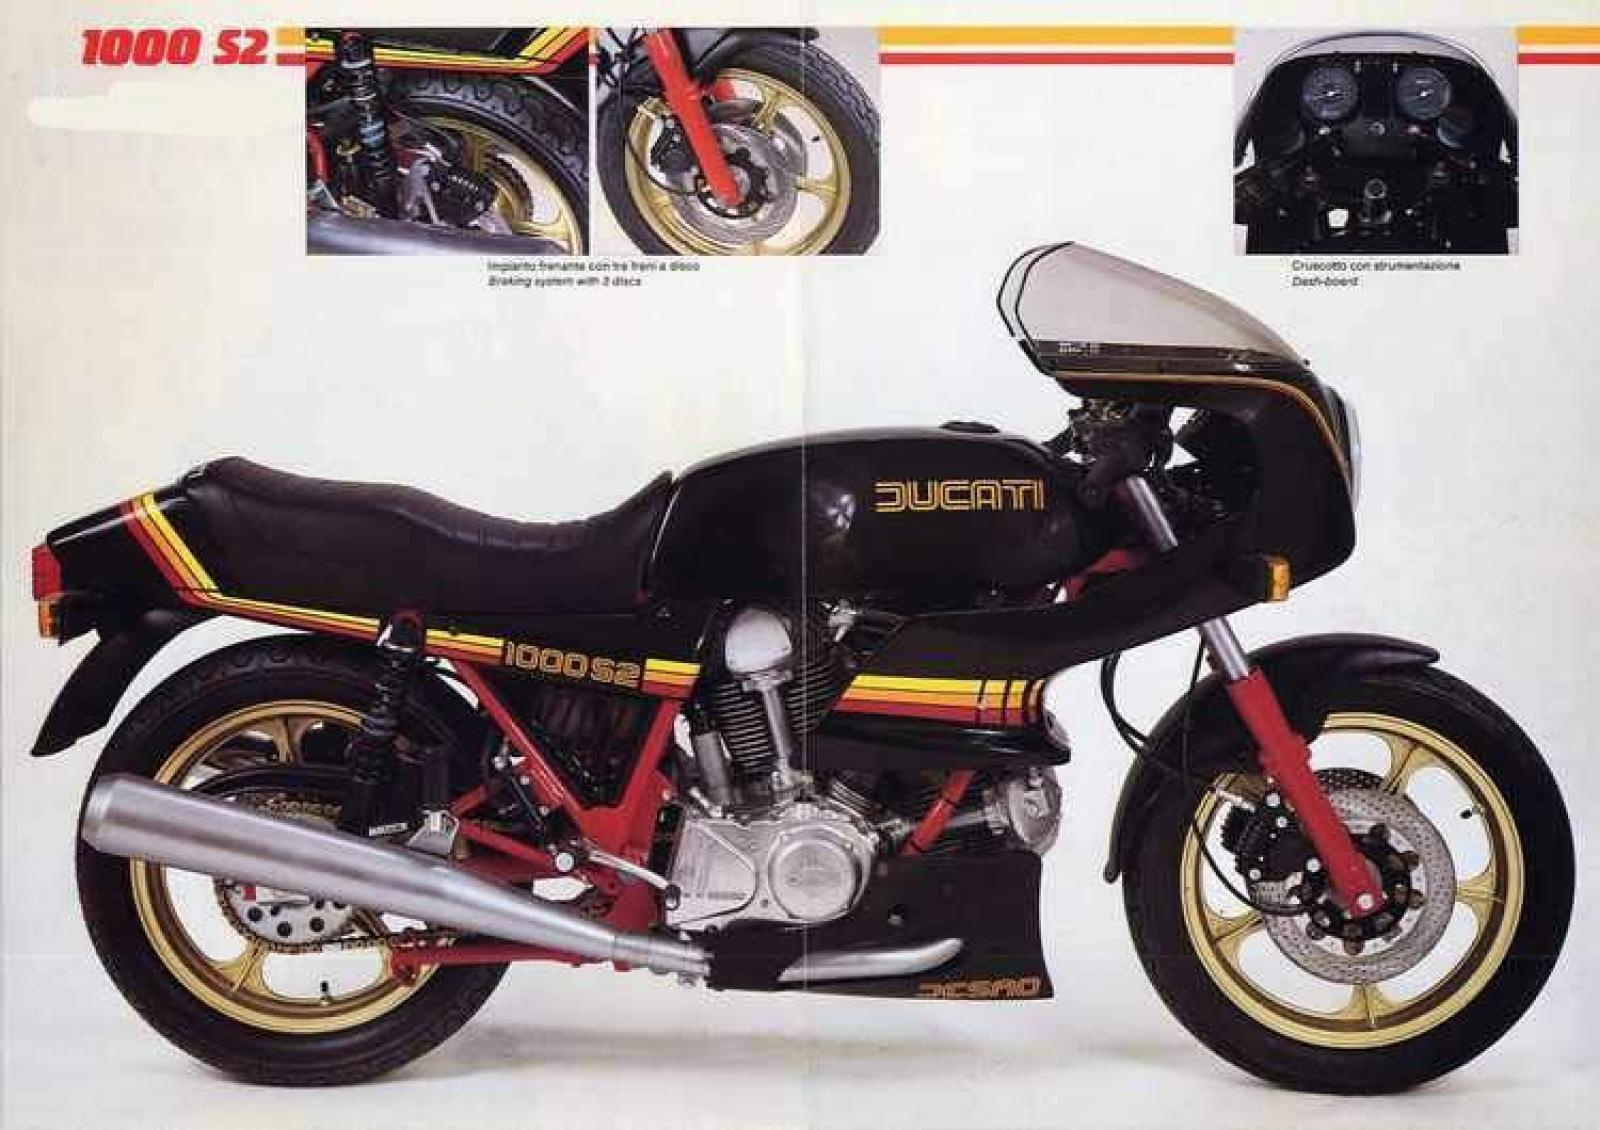 1986 Ducati 1000 S 2 #8